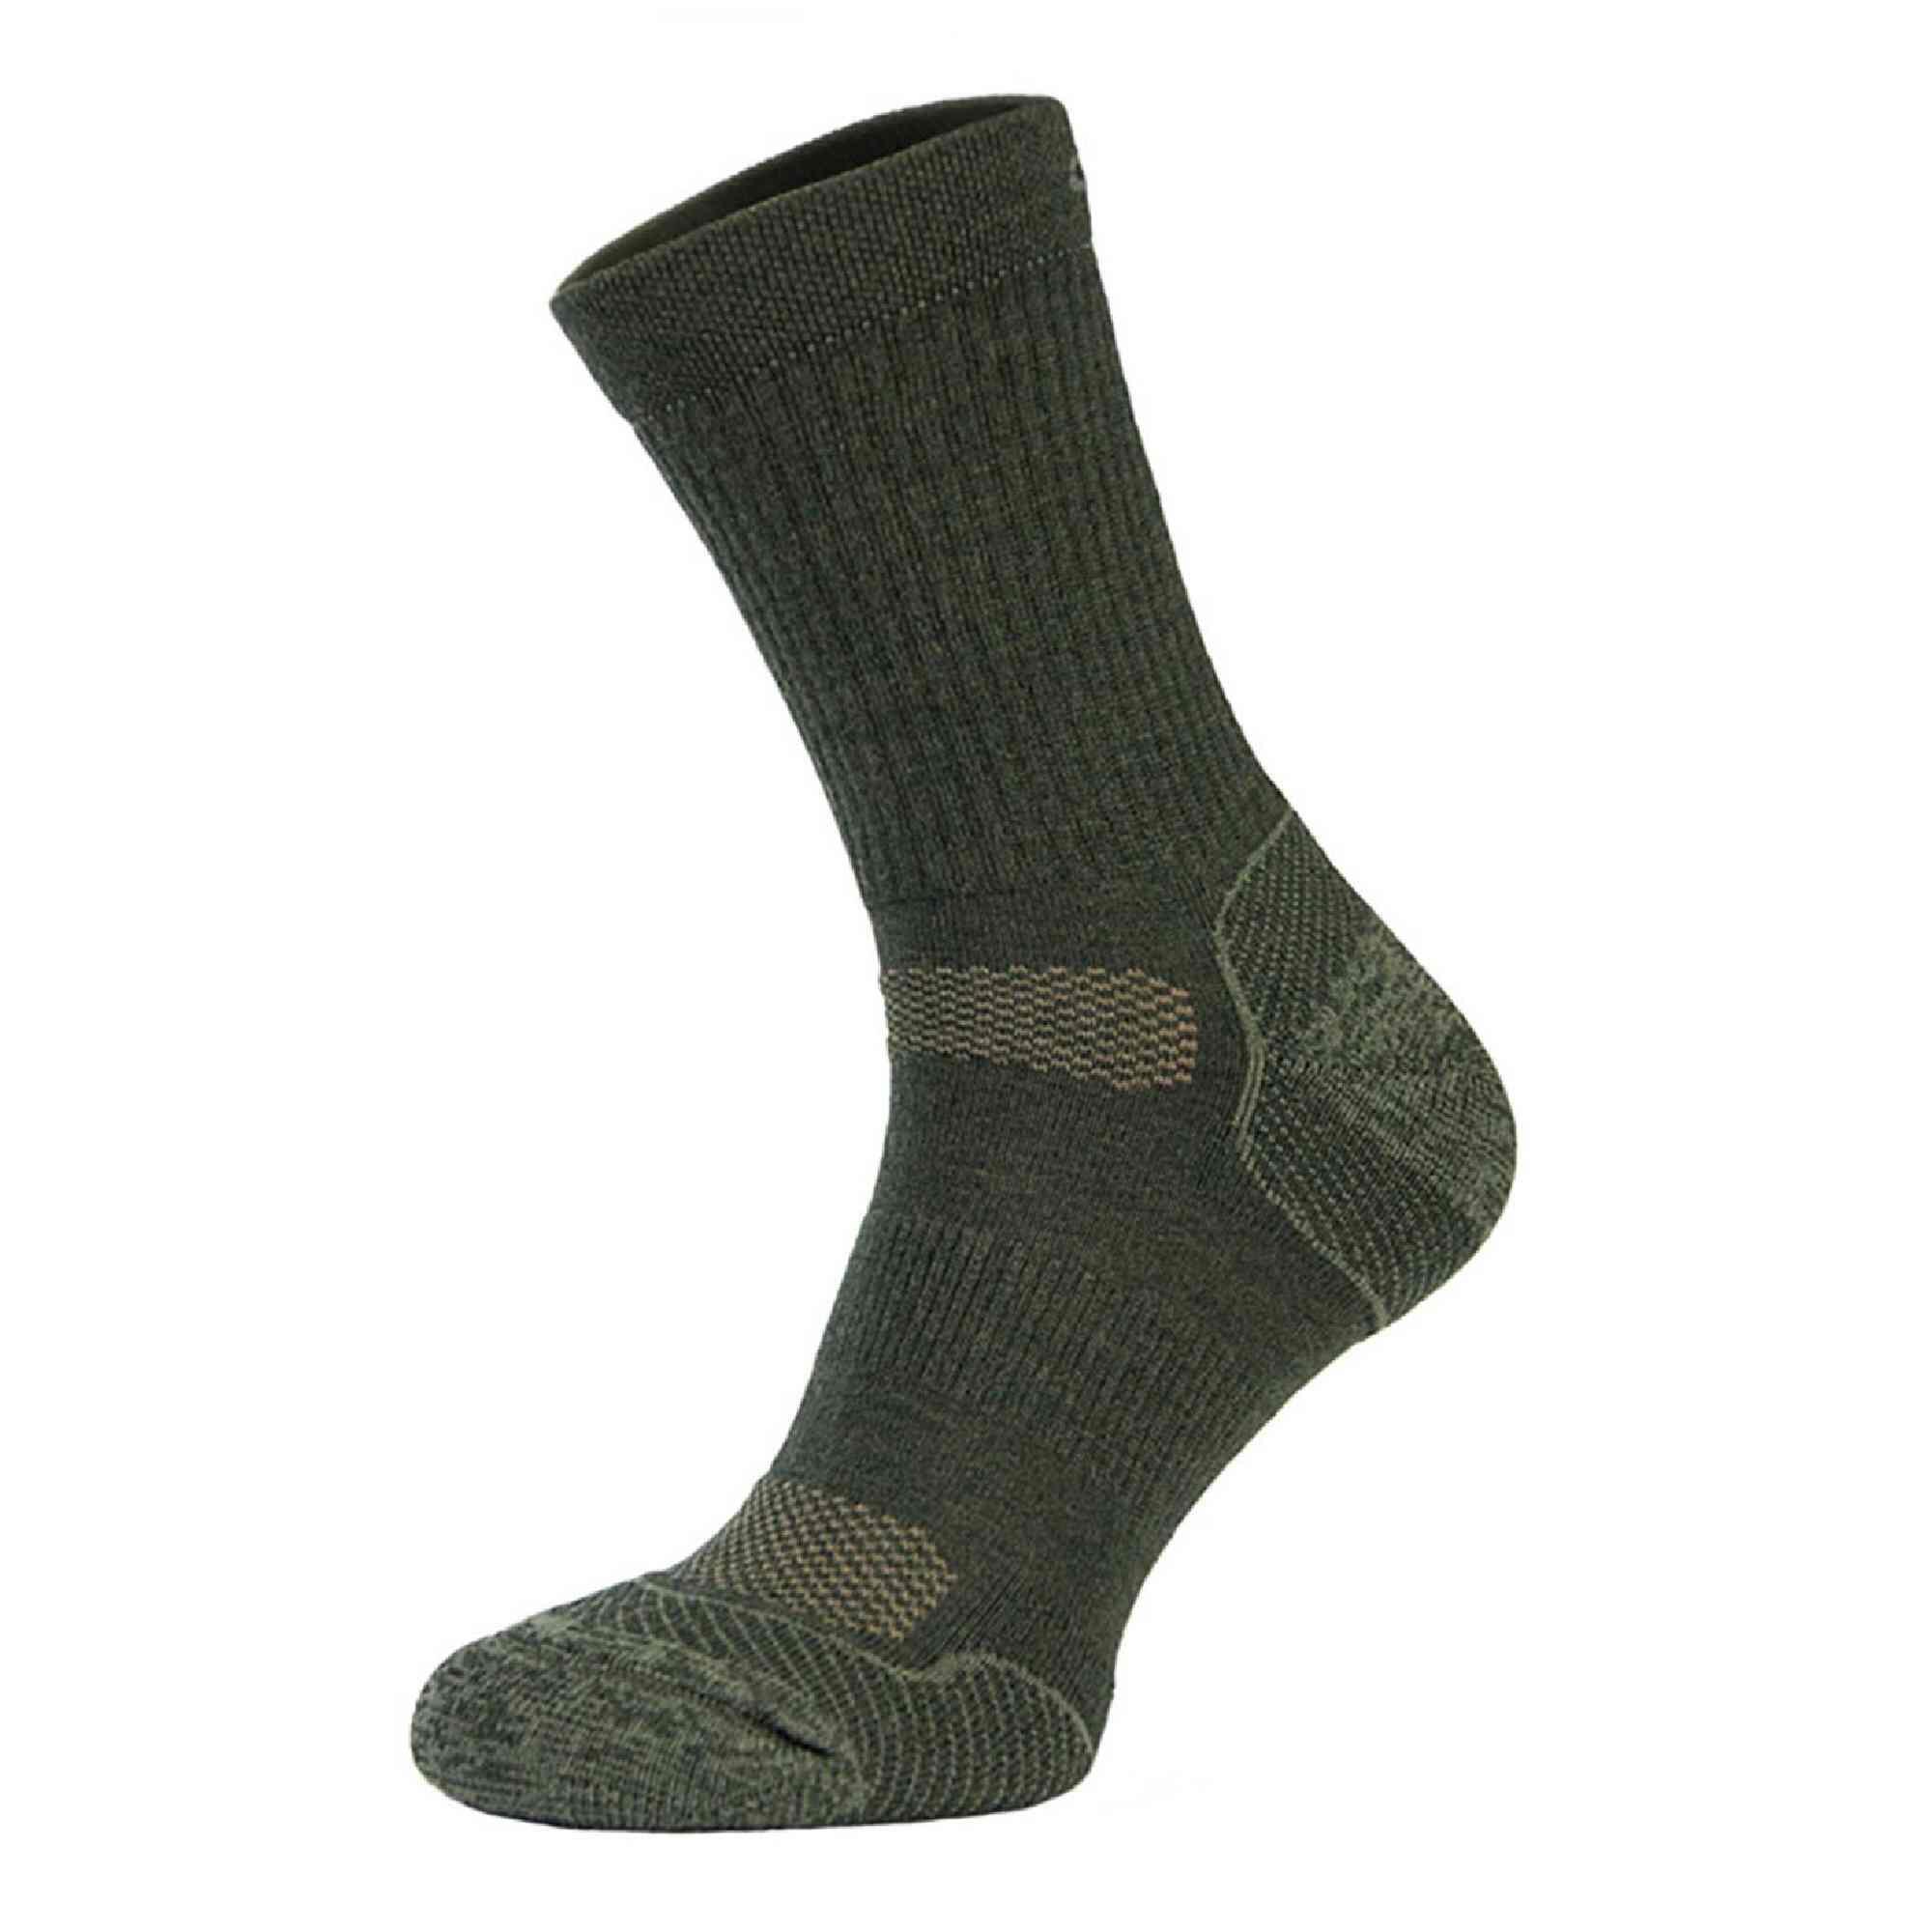 COMODO Outdoor Performance Merino Wool Quick Drying Lightweight Socks